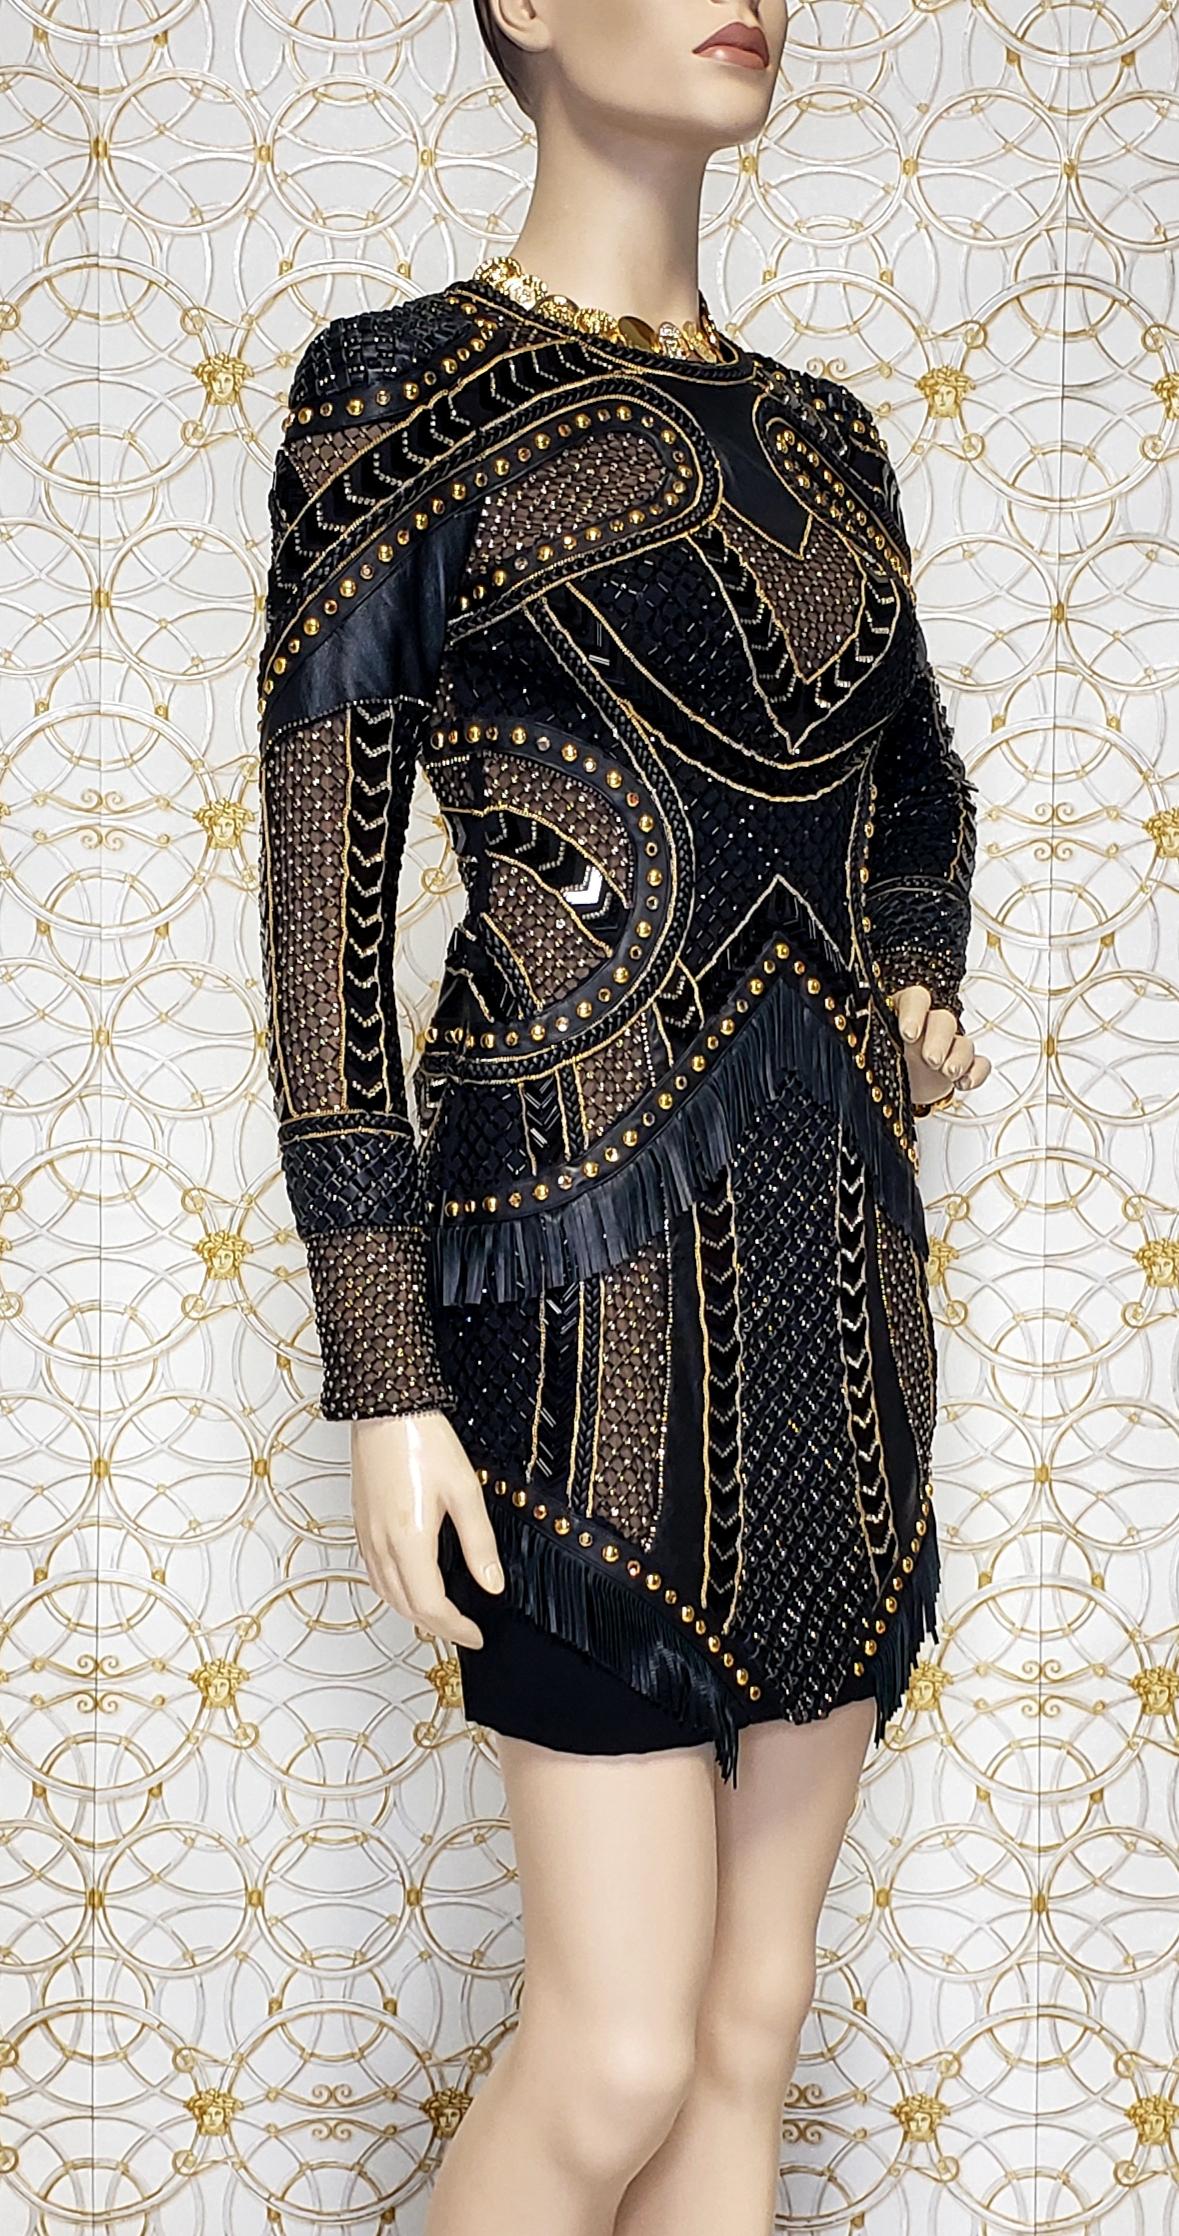 New Versace Crystal and Stud Embellished Leather Dress w/ Fringe 1